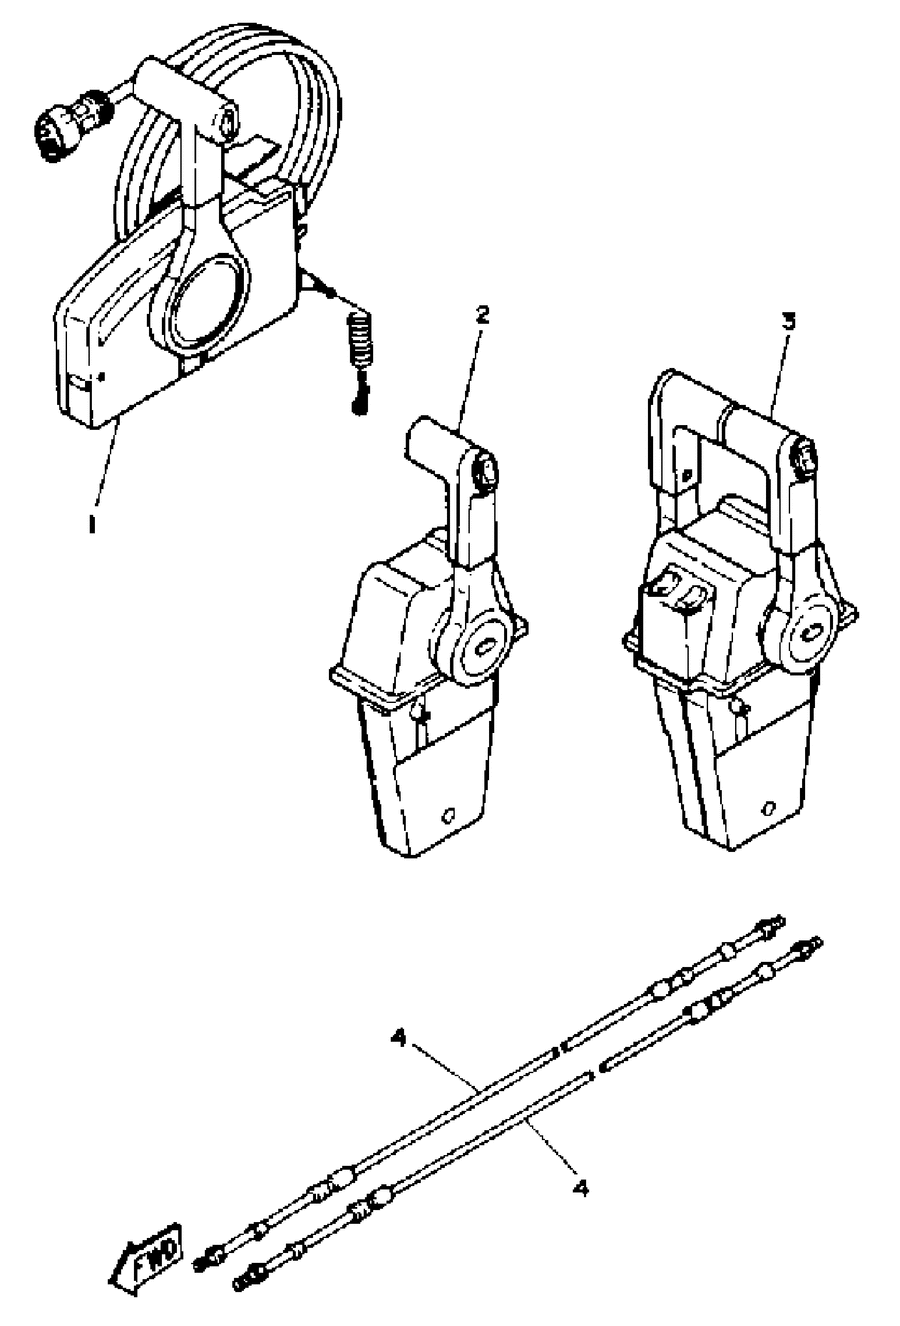 1992 L150TXRQ REMOTE CONTROL CABLES